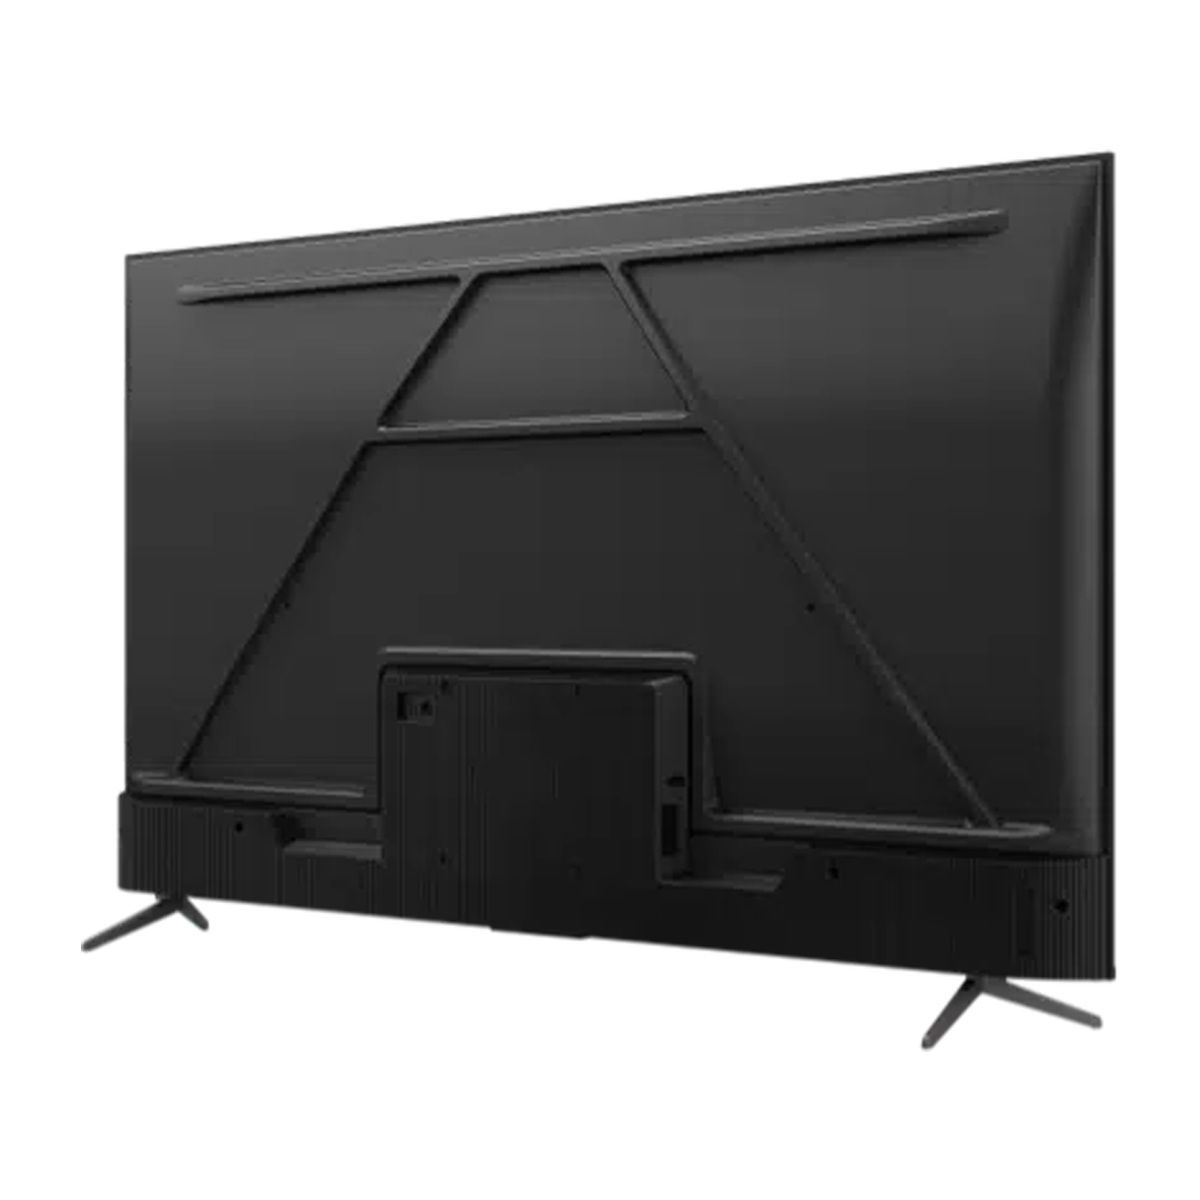 TCL 50 inches 4K HDR Smart LED TV, Black, 50P735